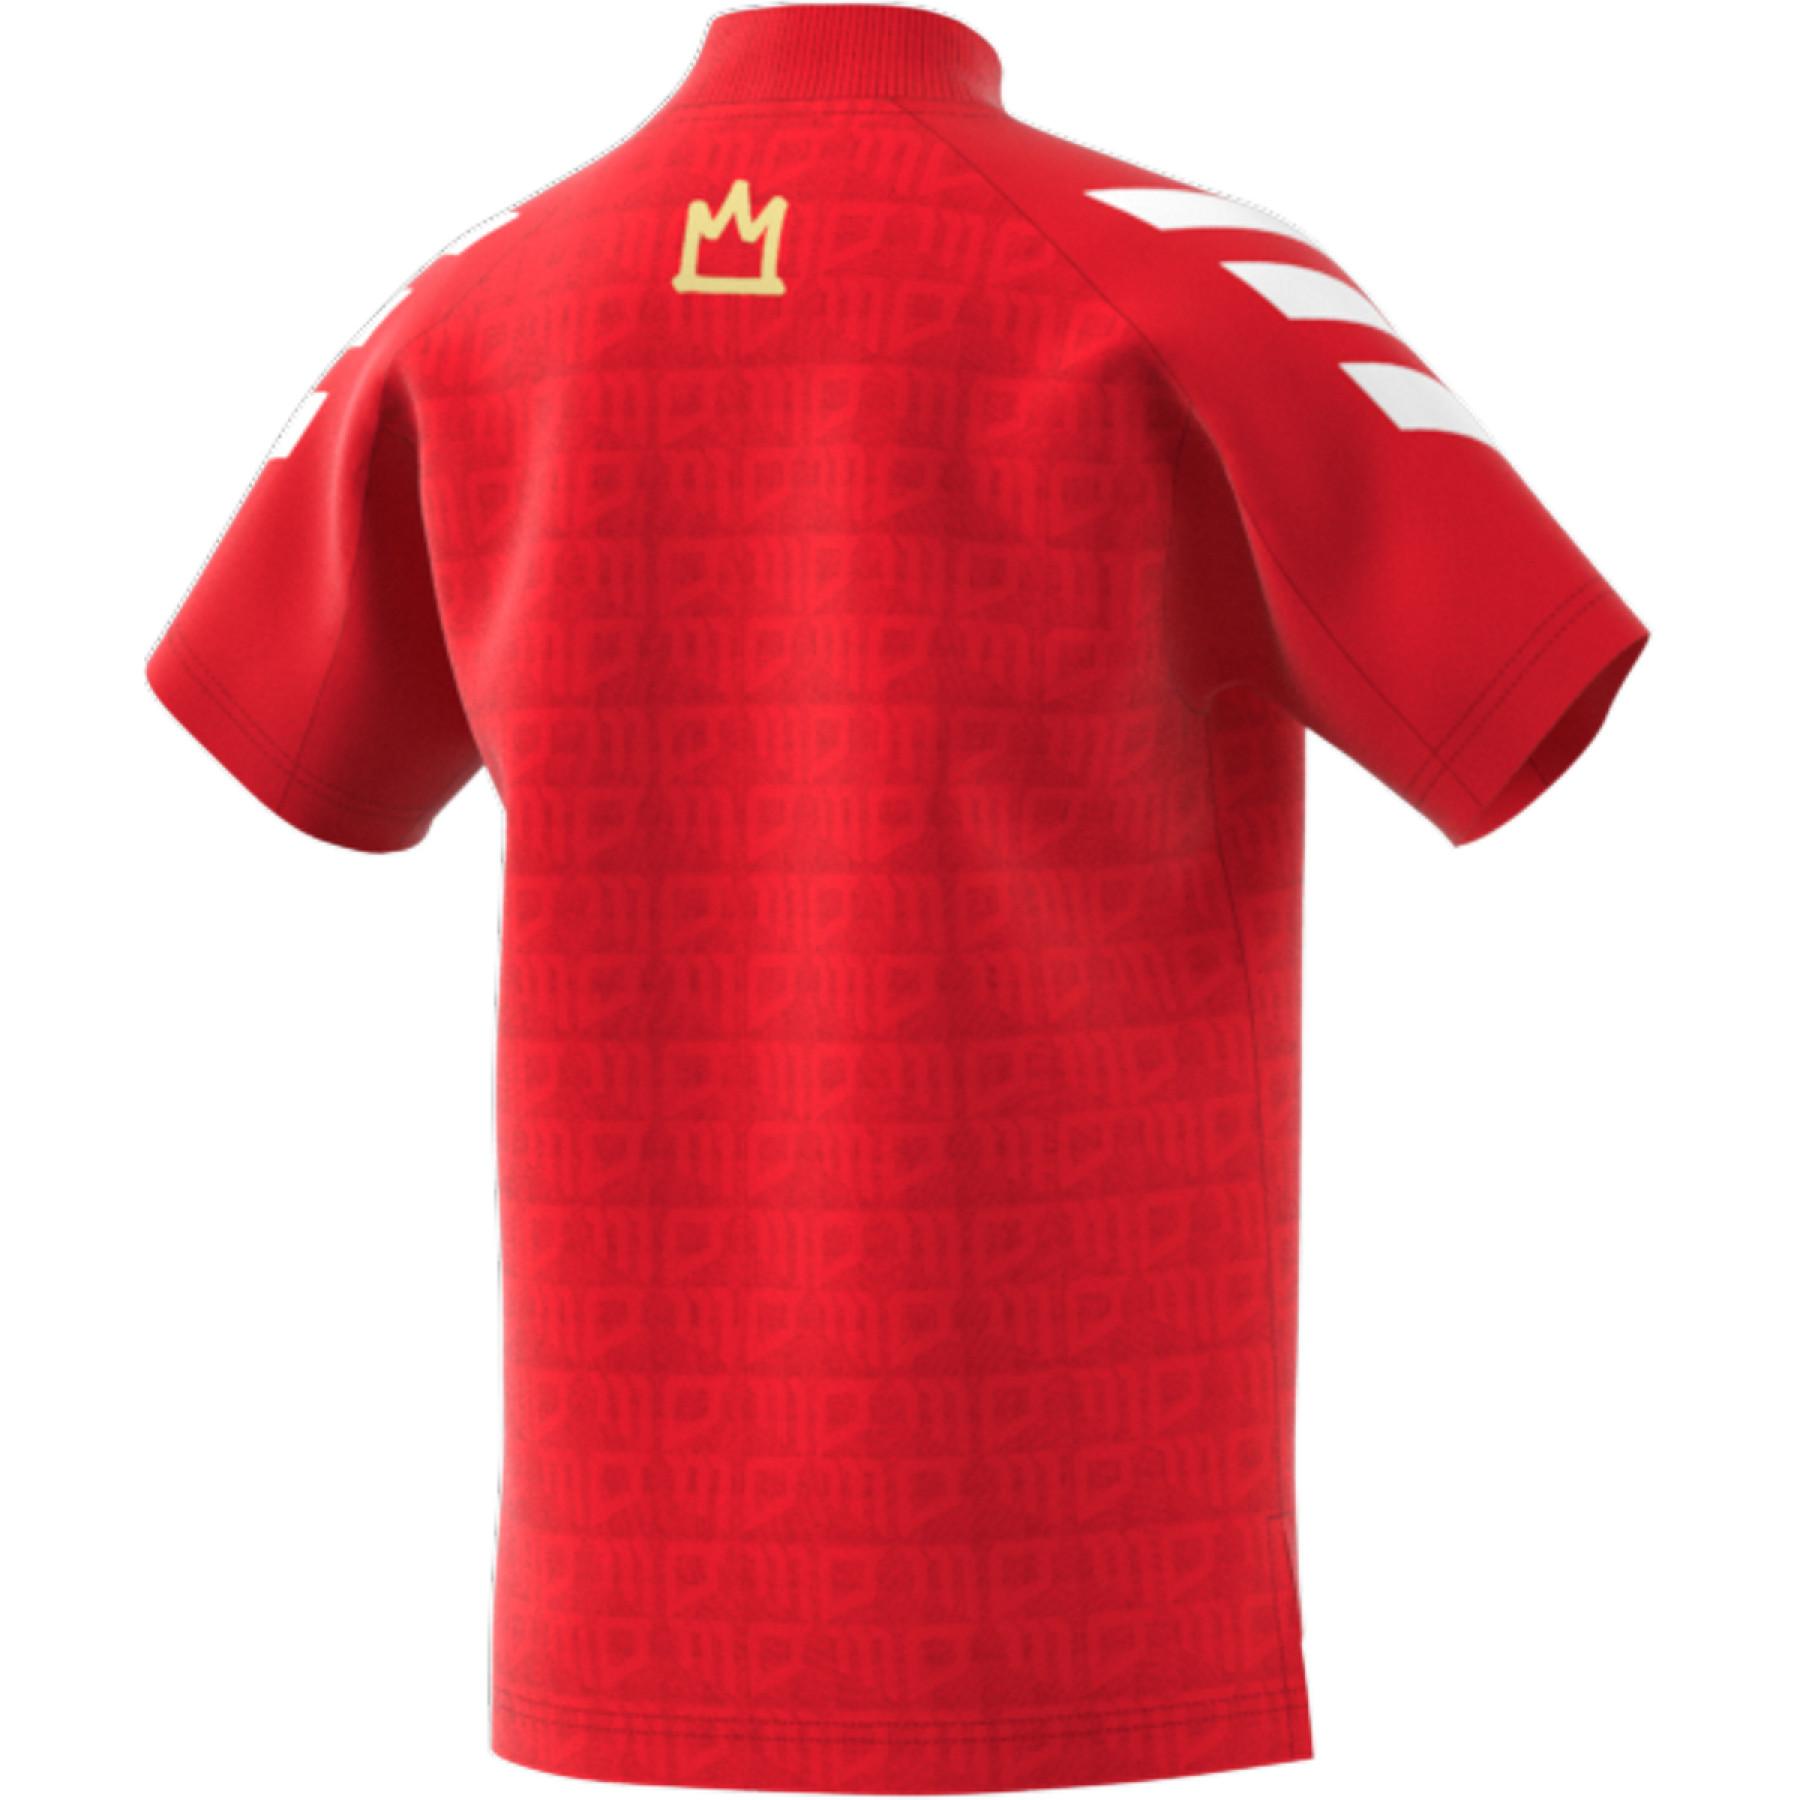 Children's jersey adidas Salah Football-Inspired